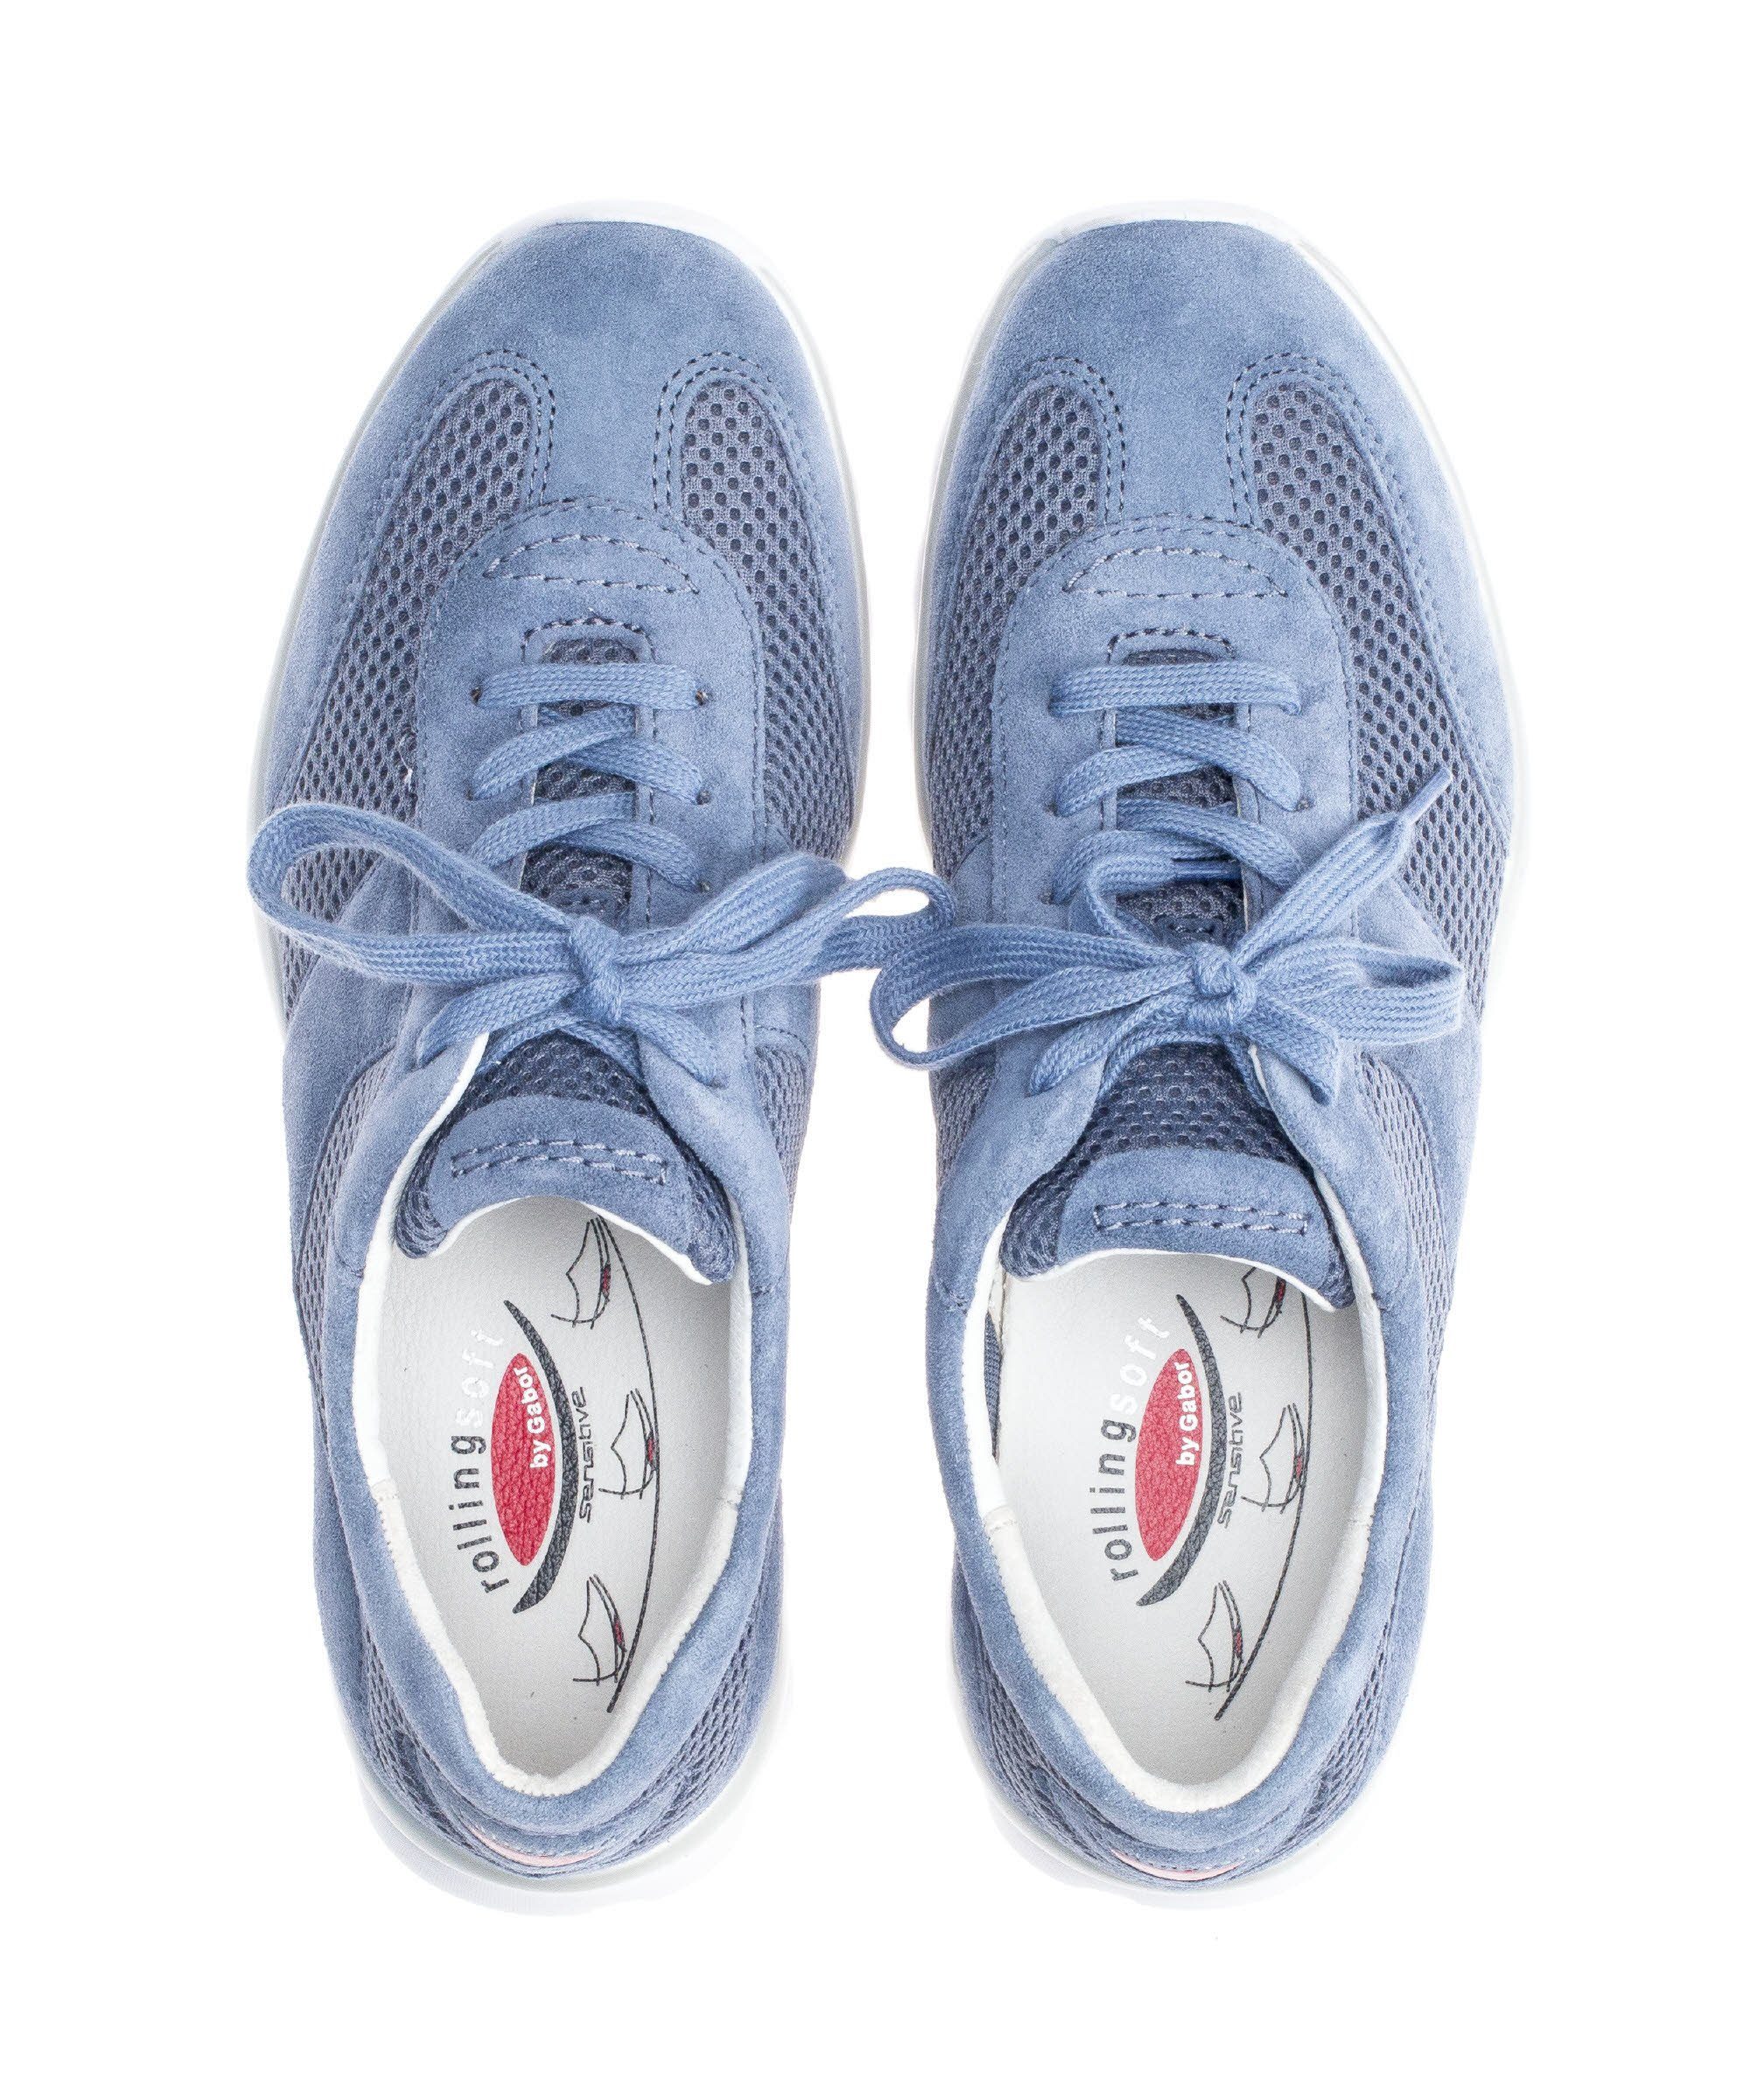 Gabor 86.966.26 (nautic) Blau Sneaker